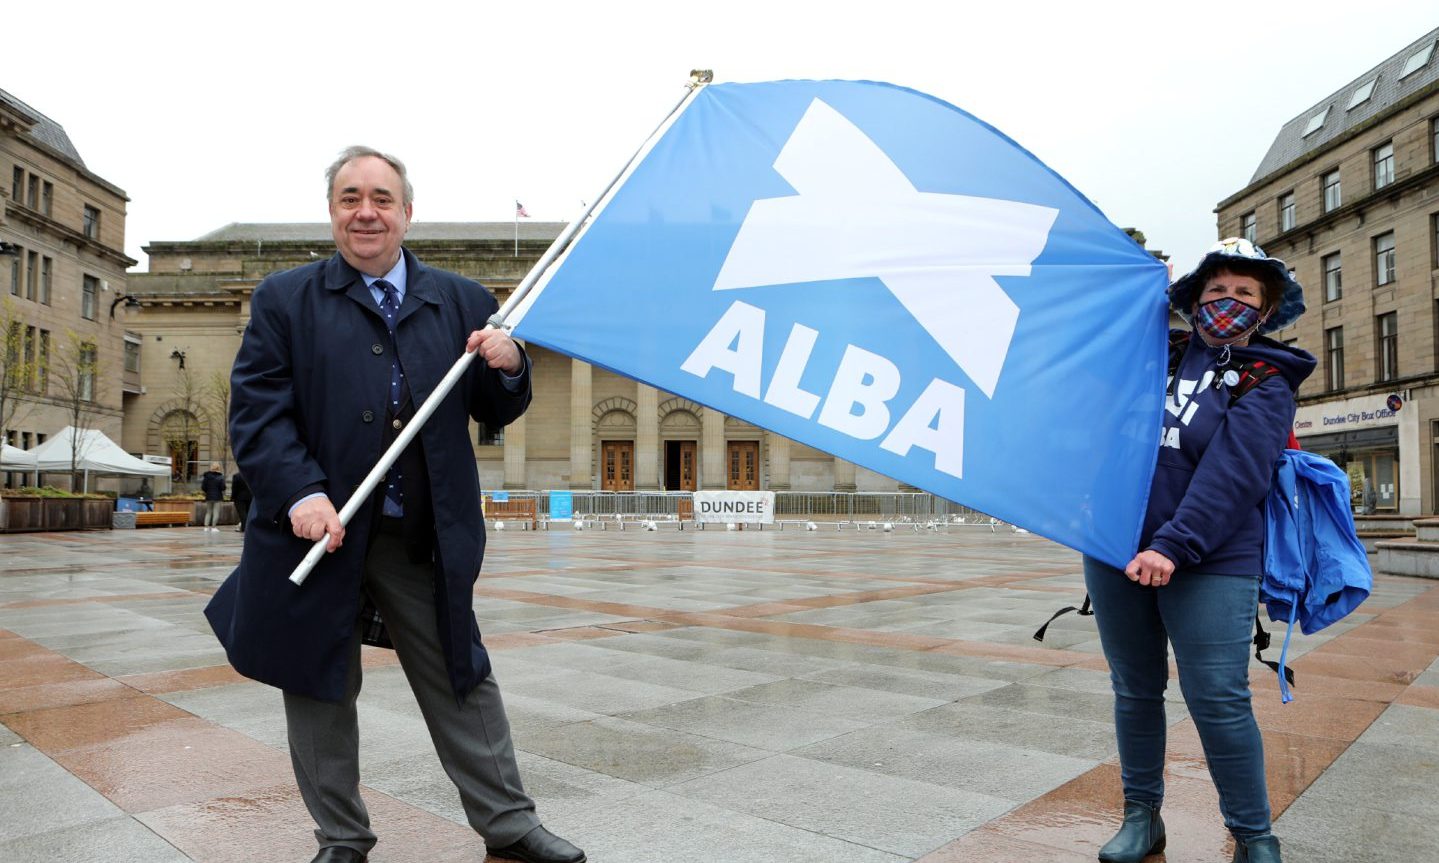 Alex Salmond in Dundee. Image: Gareth Jennings/DC Thomson.